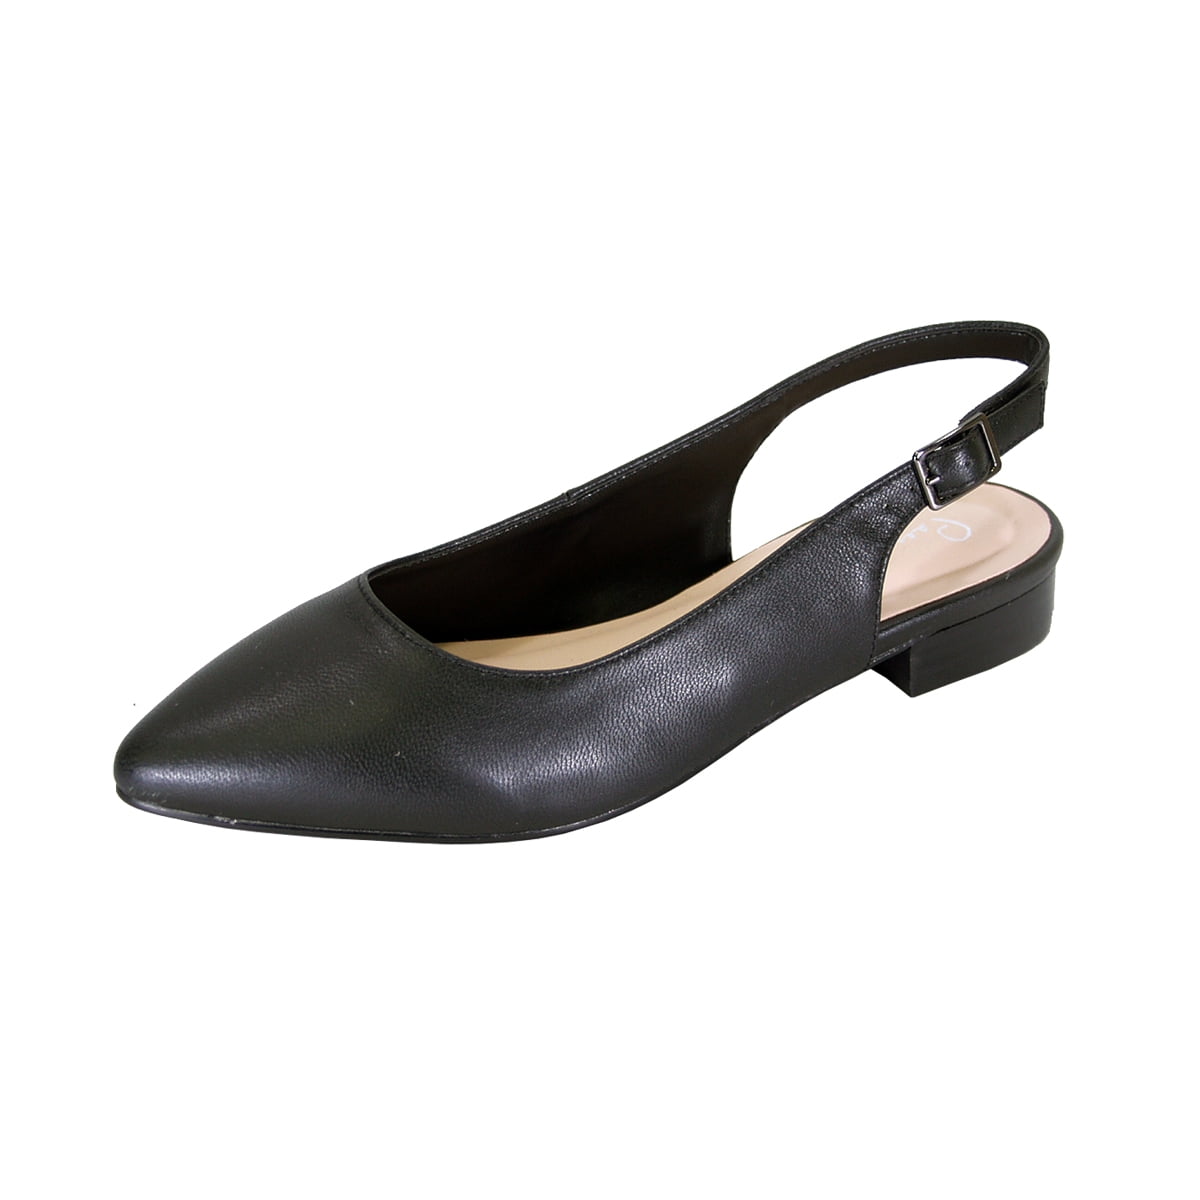 ComeShun Womens Court Shoes Comfort Ankle Strap DOrsay Classic Flat Dress Pumps